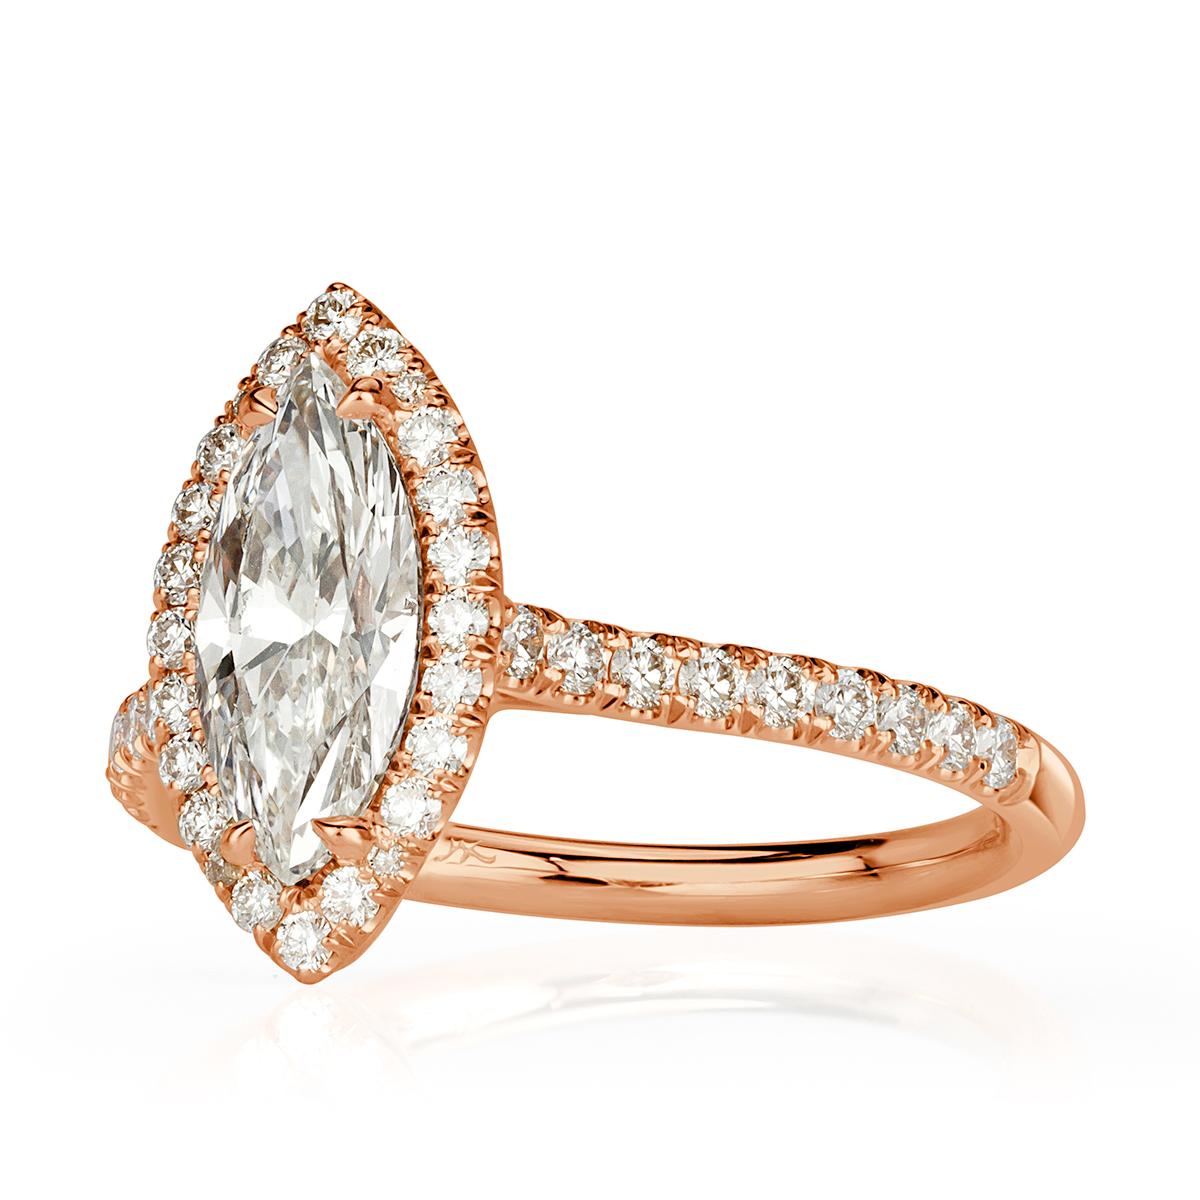 Women's or Men's Mark Broumand 1.53 Carat Marquise Cut Diamond Engagement Ring